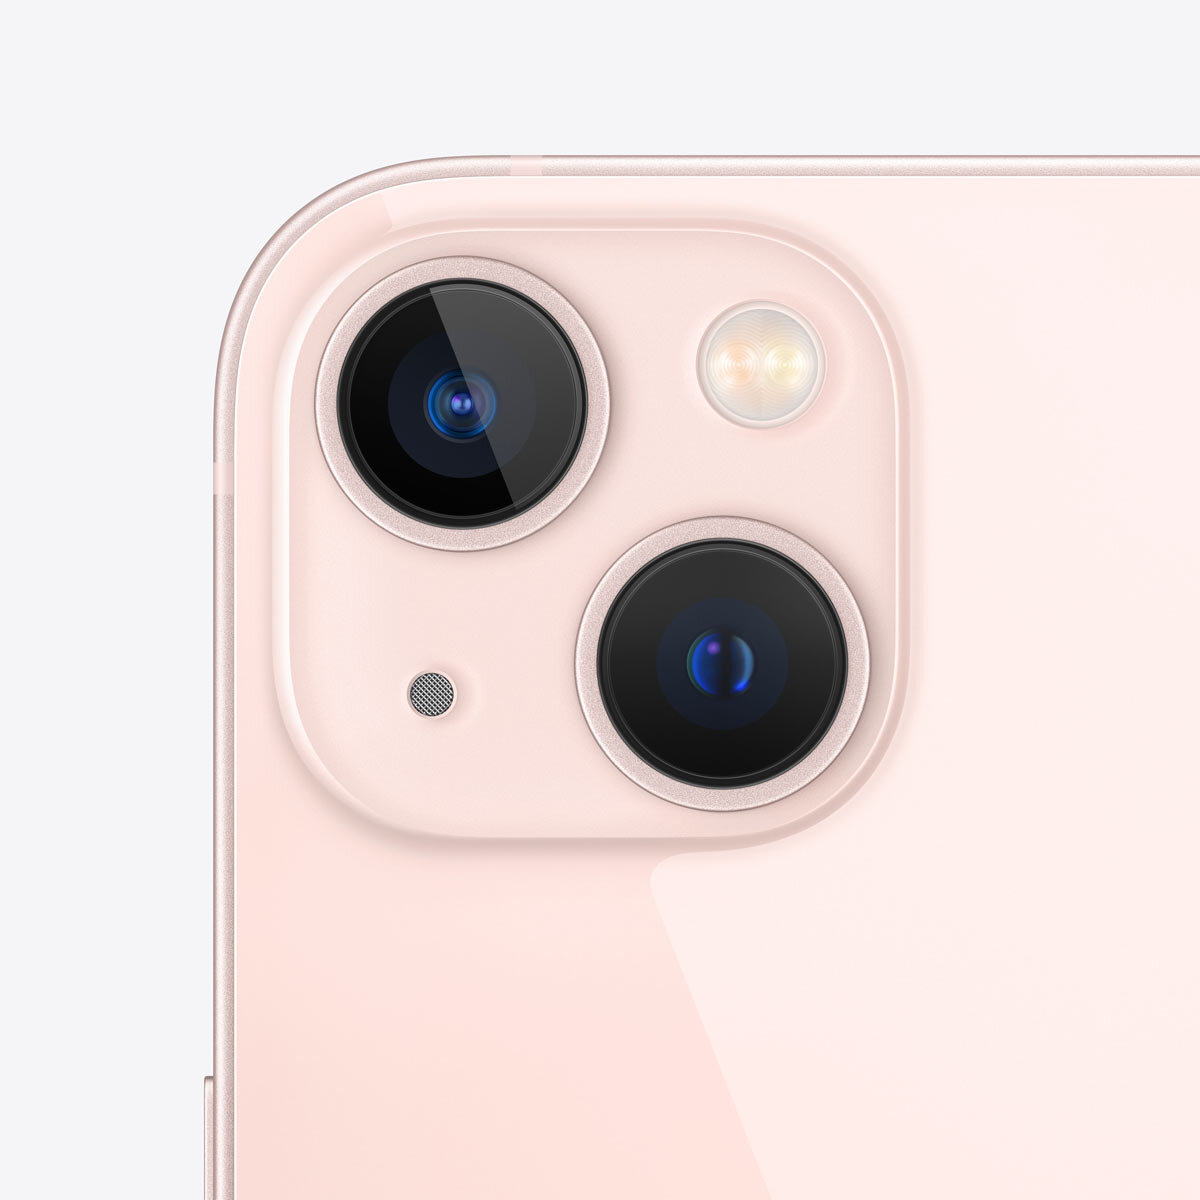 Buy Apple iPhone 13 mini 512GB Sim Free Mobile Phone in Pink, MLKD3B/A at costco.co.uk